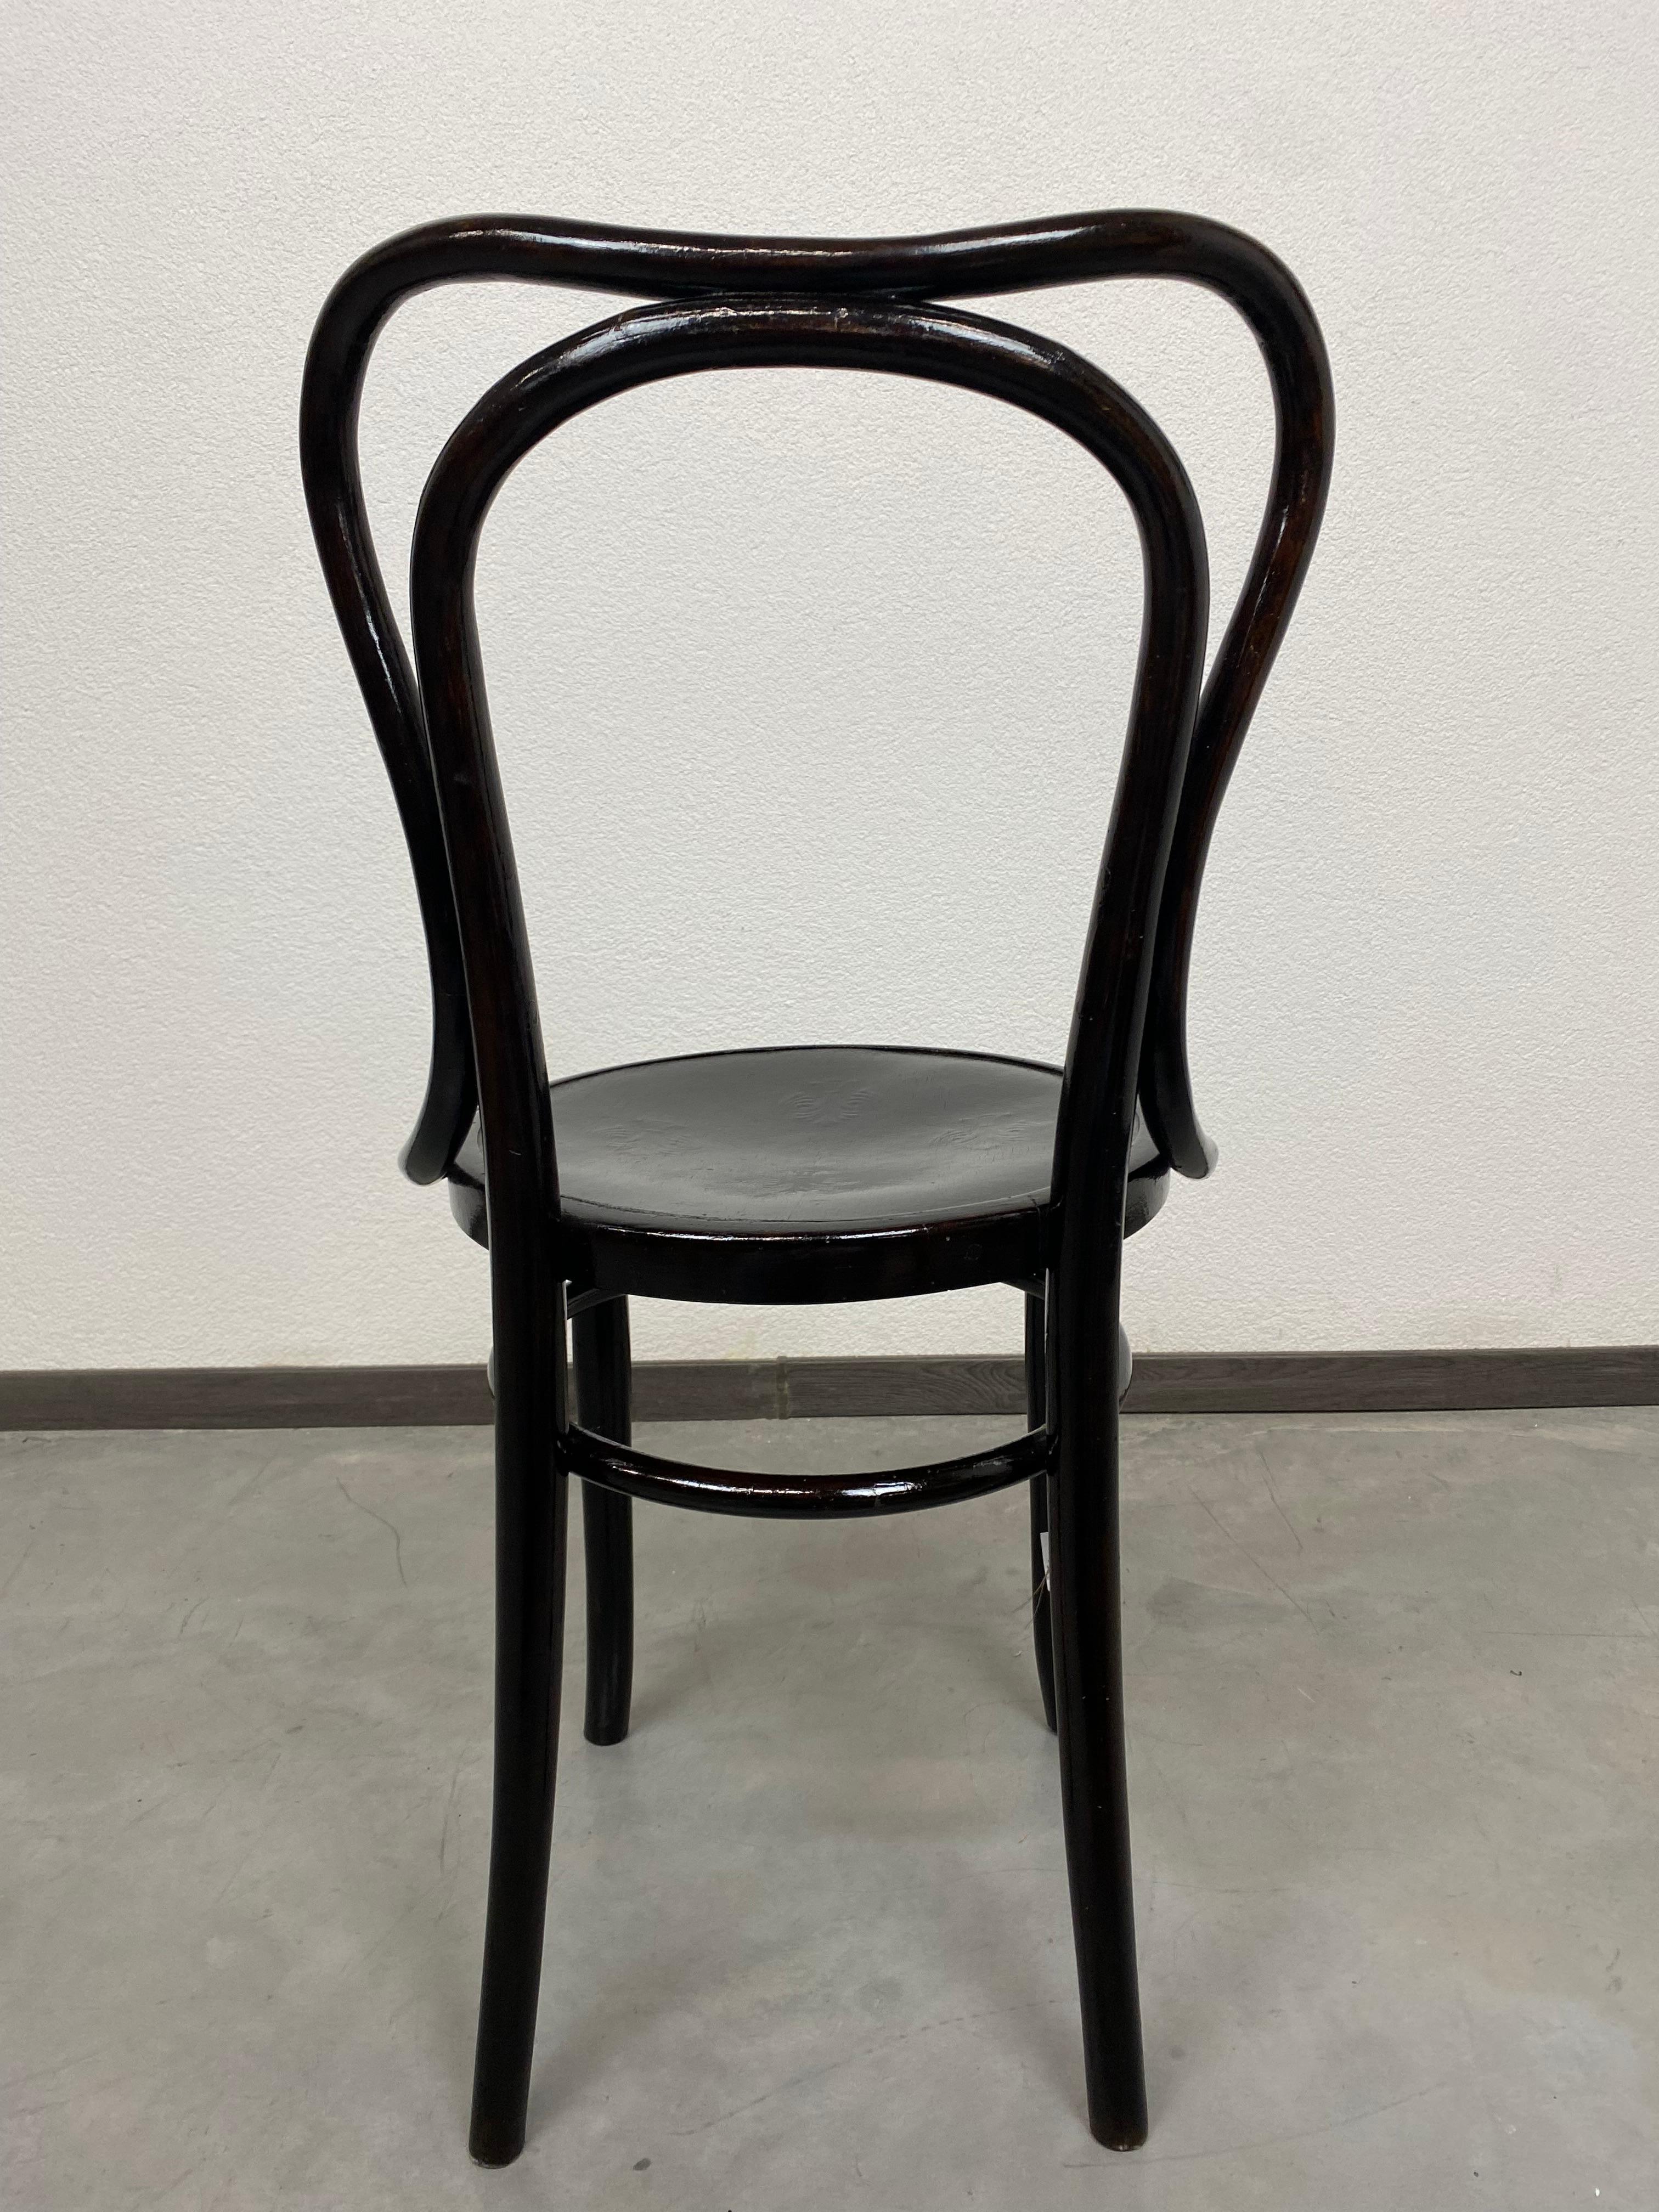 Seltener Thonet-Stuhl der Blac-Sezession (Frühes 20. Jahrhundert) im Angebot